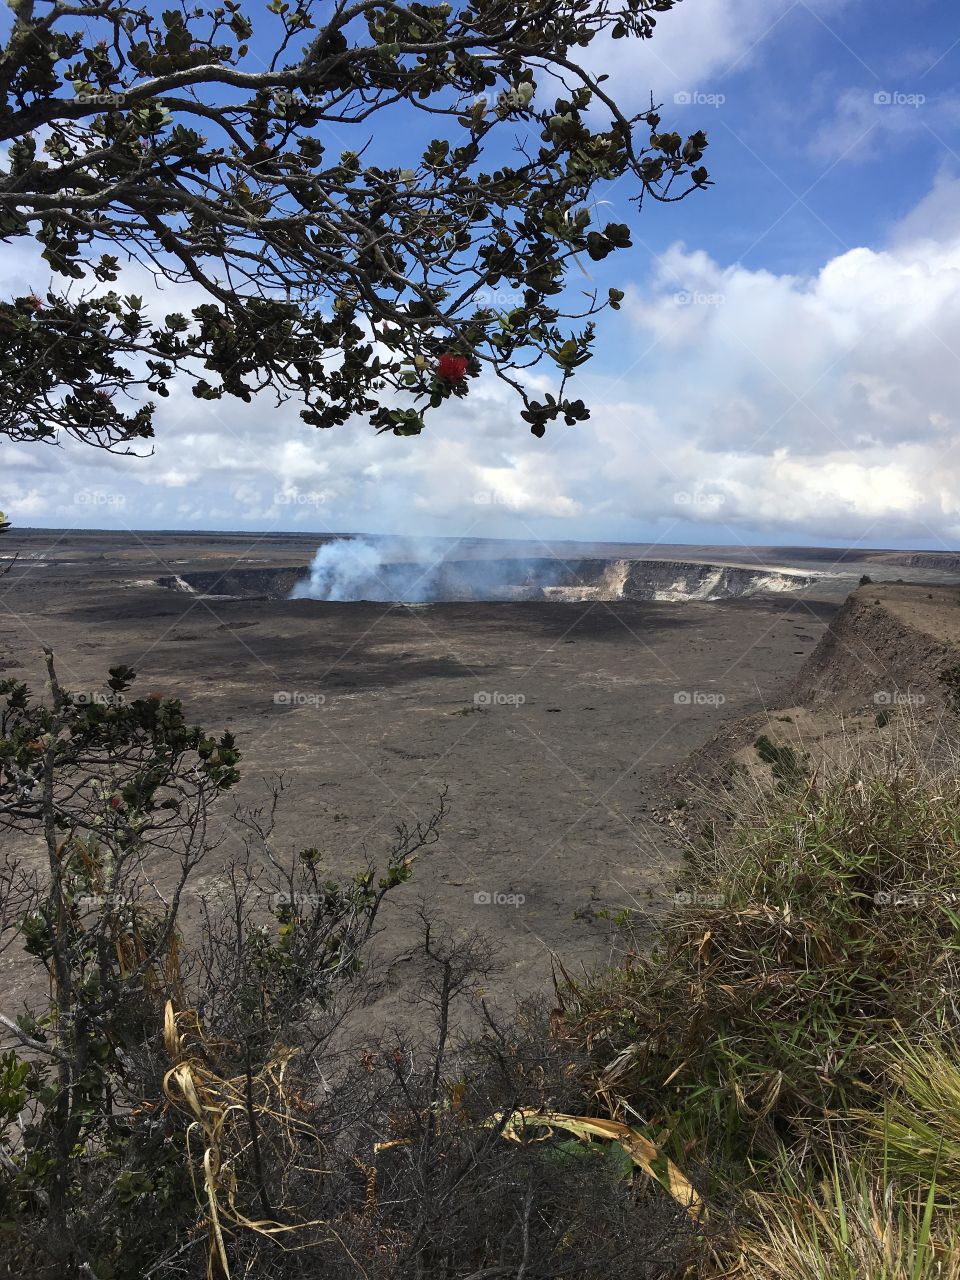 Hawaii Volcanoes National Park
